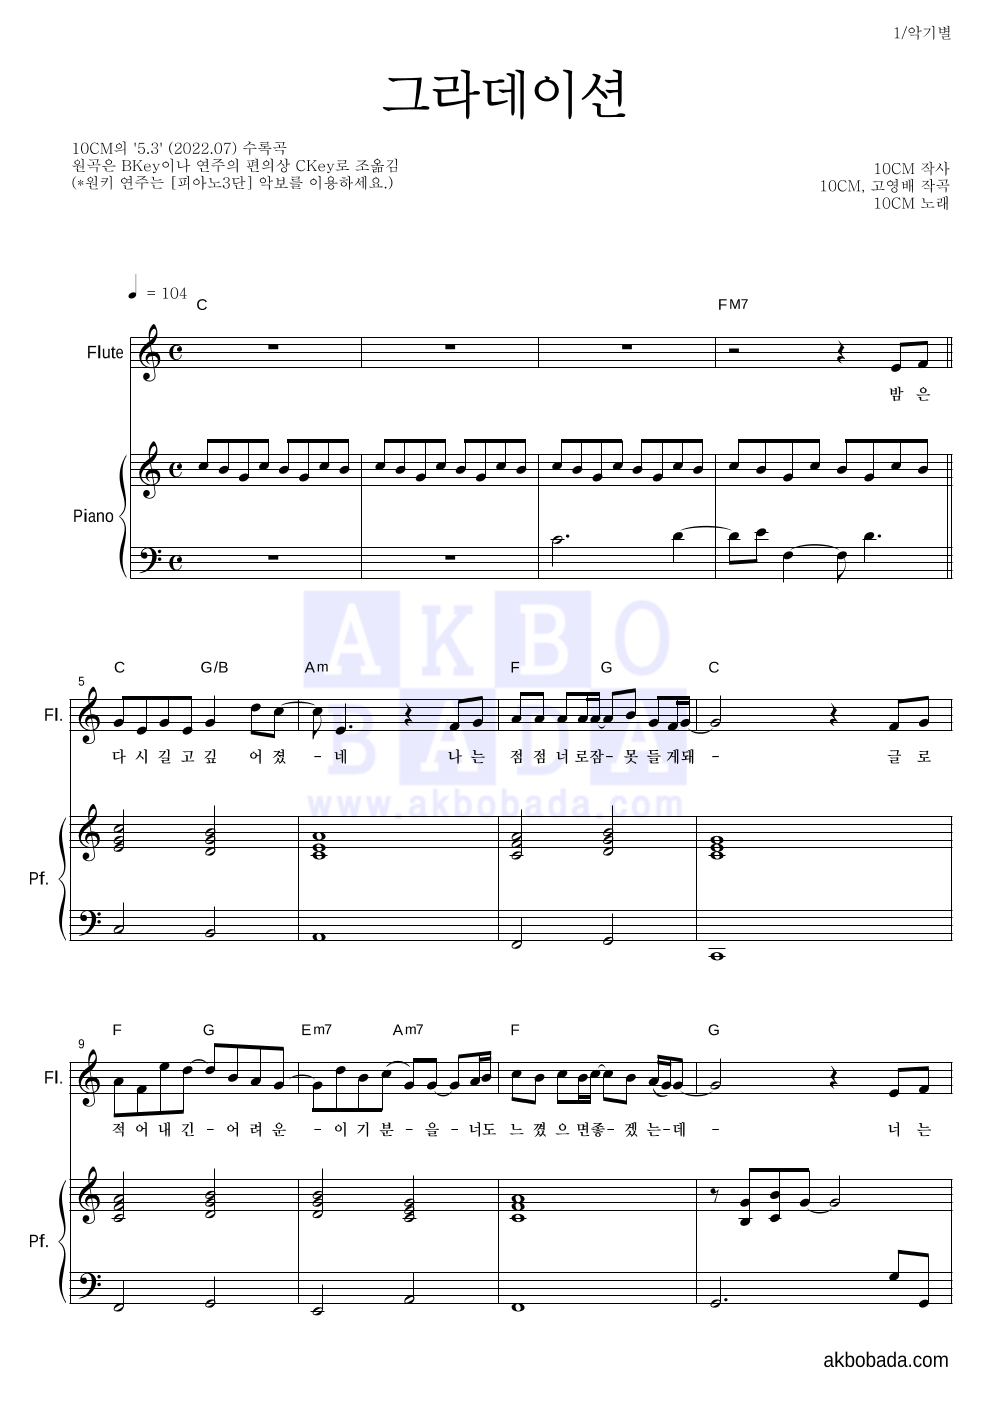 10CM - 그라데이션 플룻&피아노 악보 